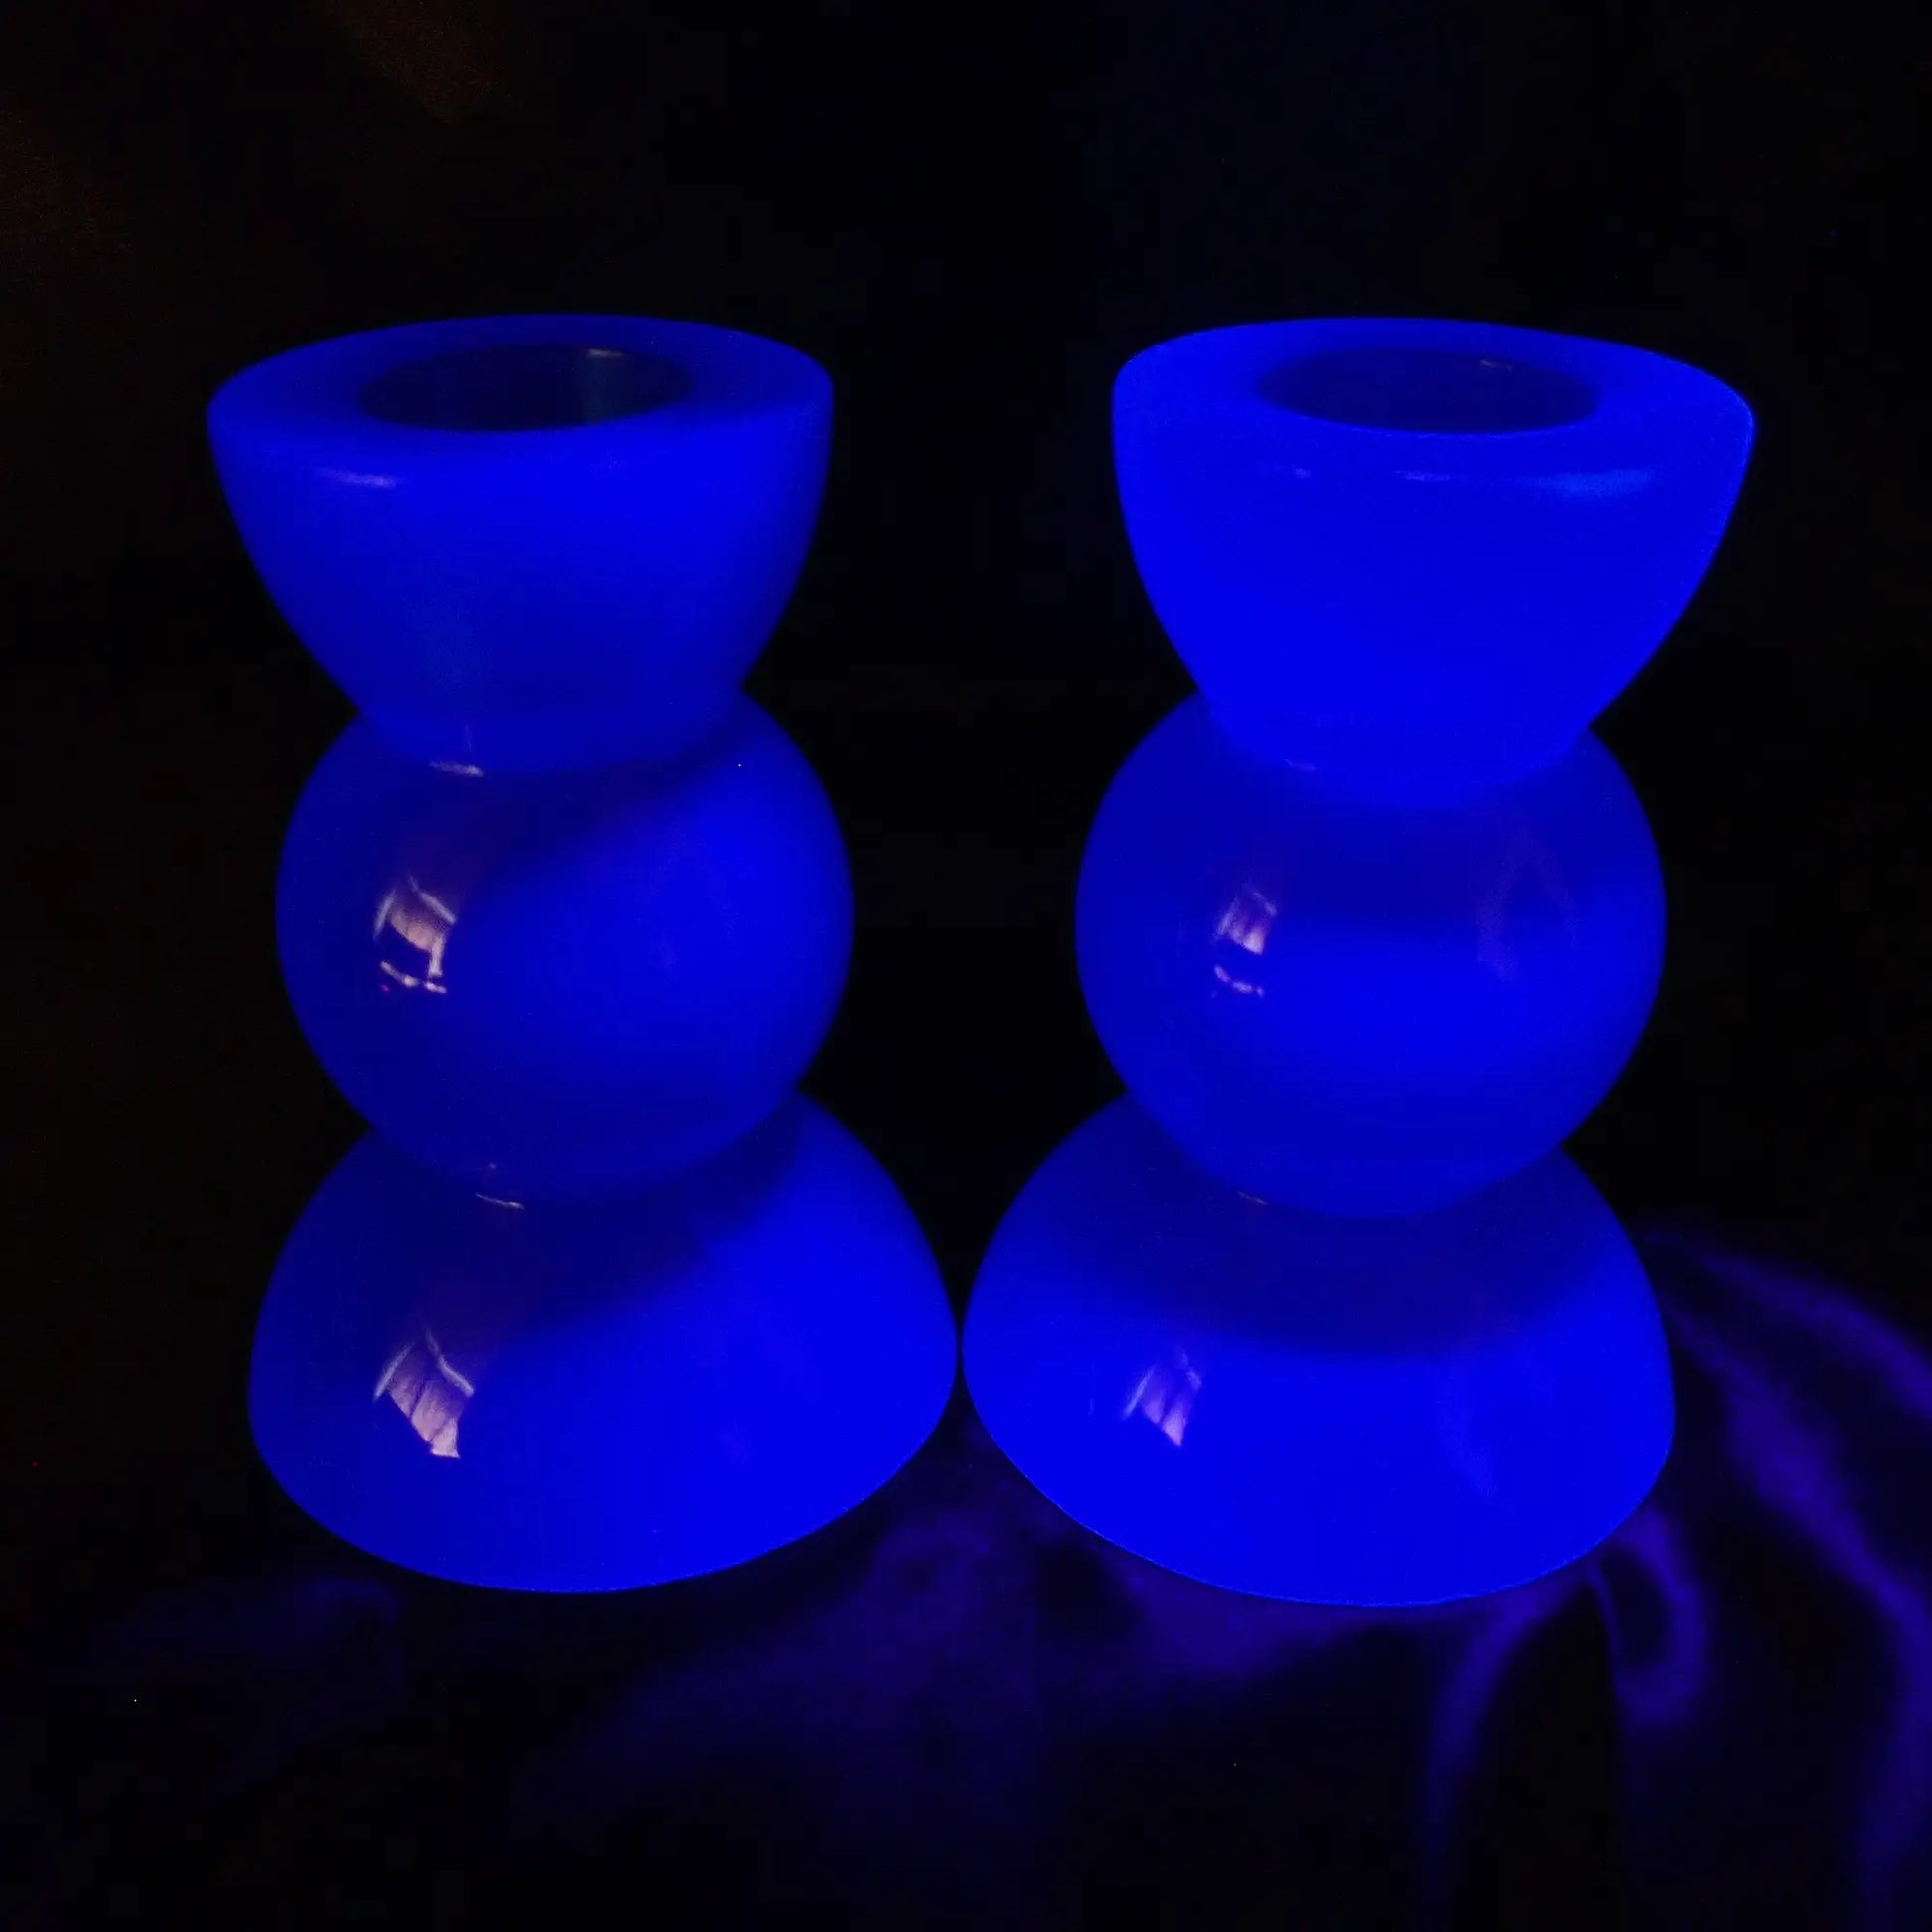 Photo showing the handmade neon blue resin candlestick holders fluorescing under a UV light.